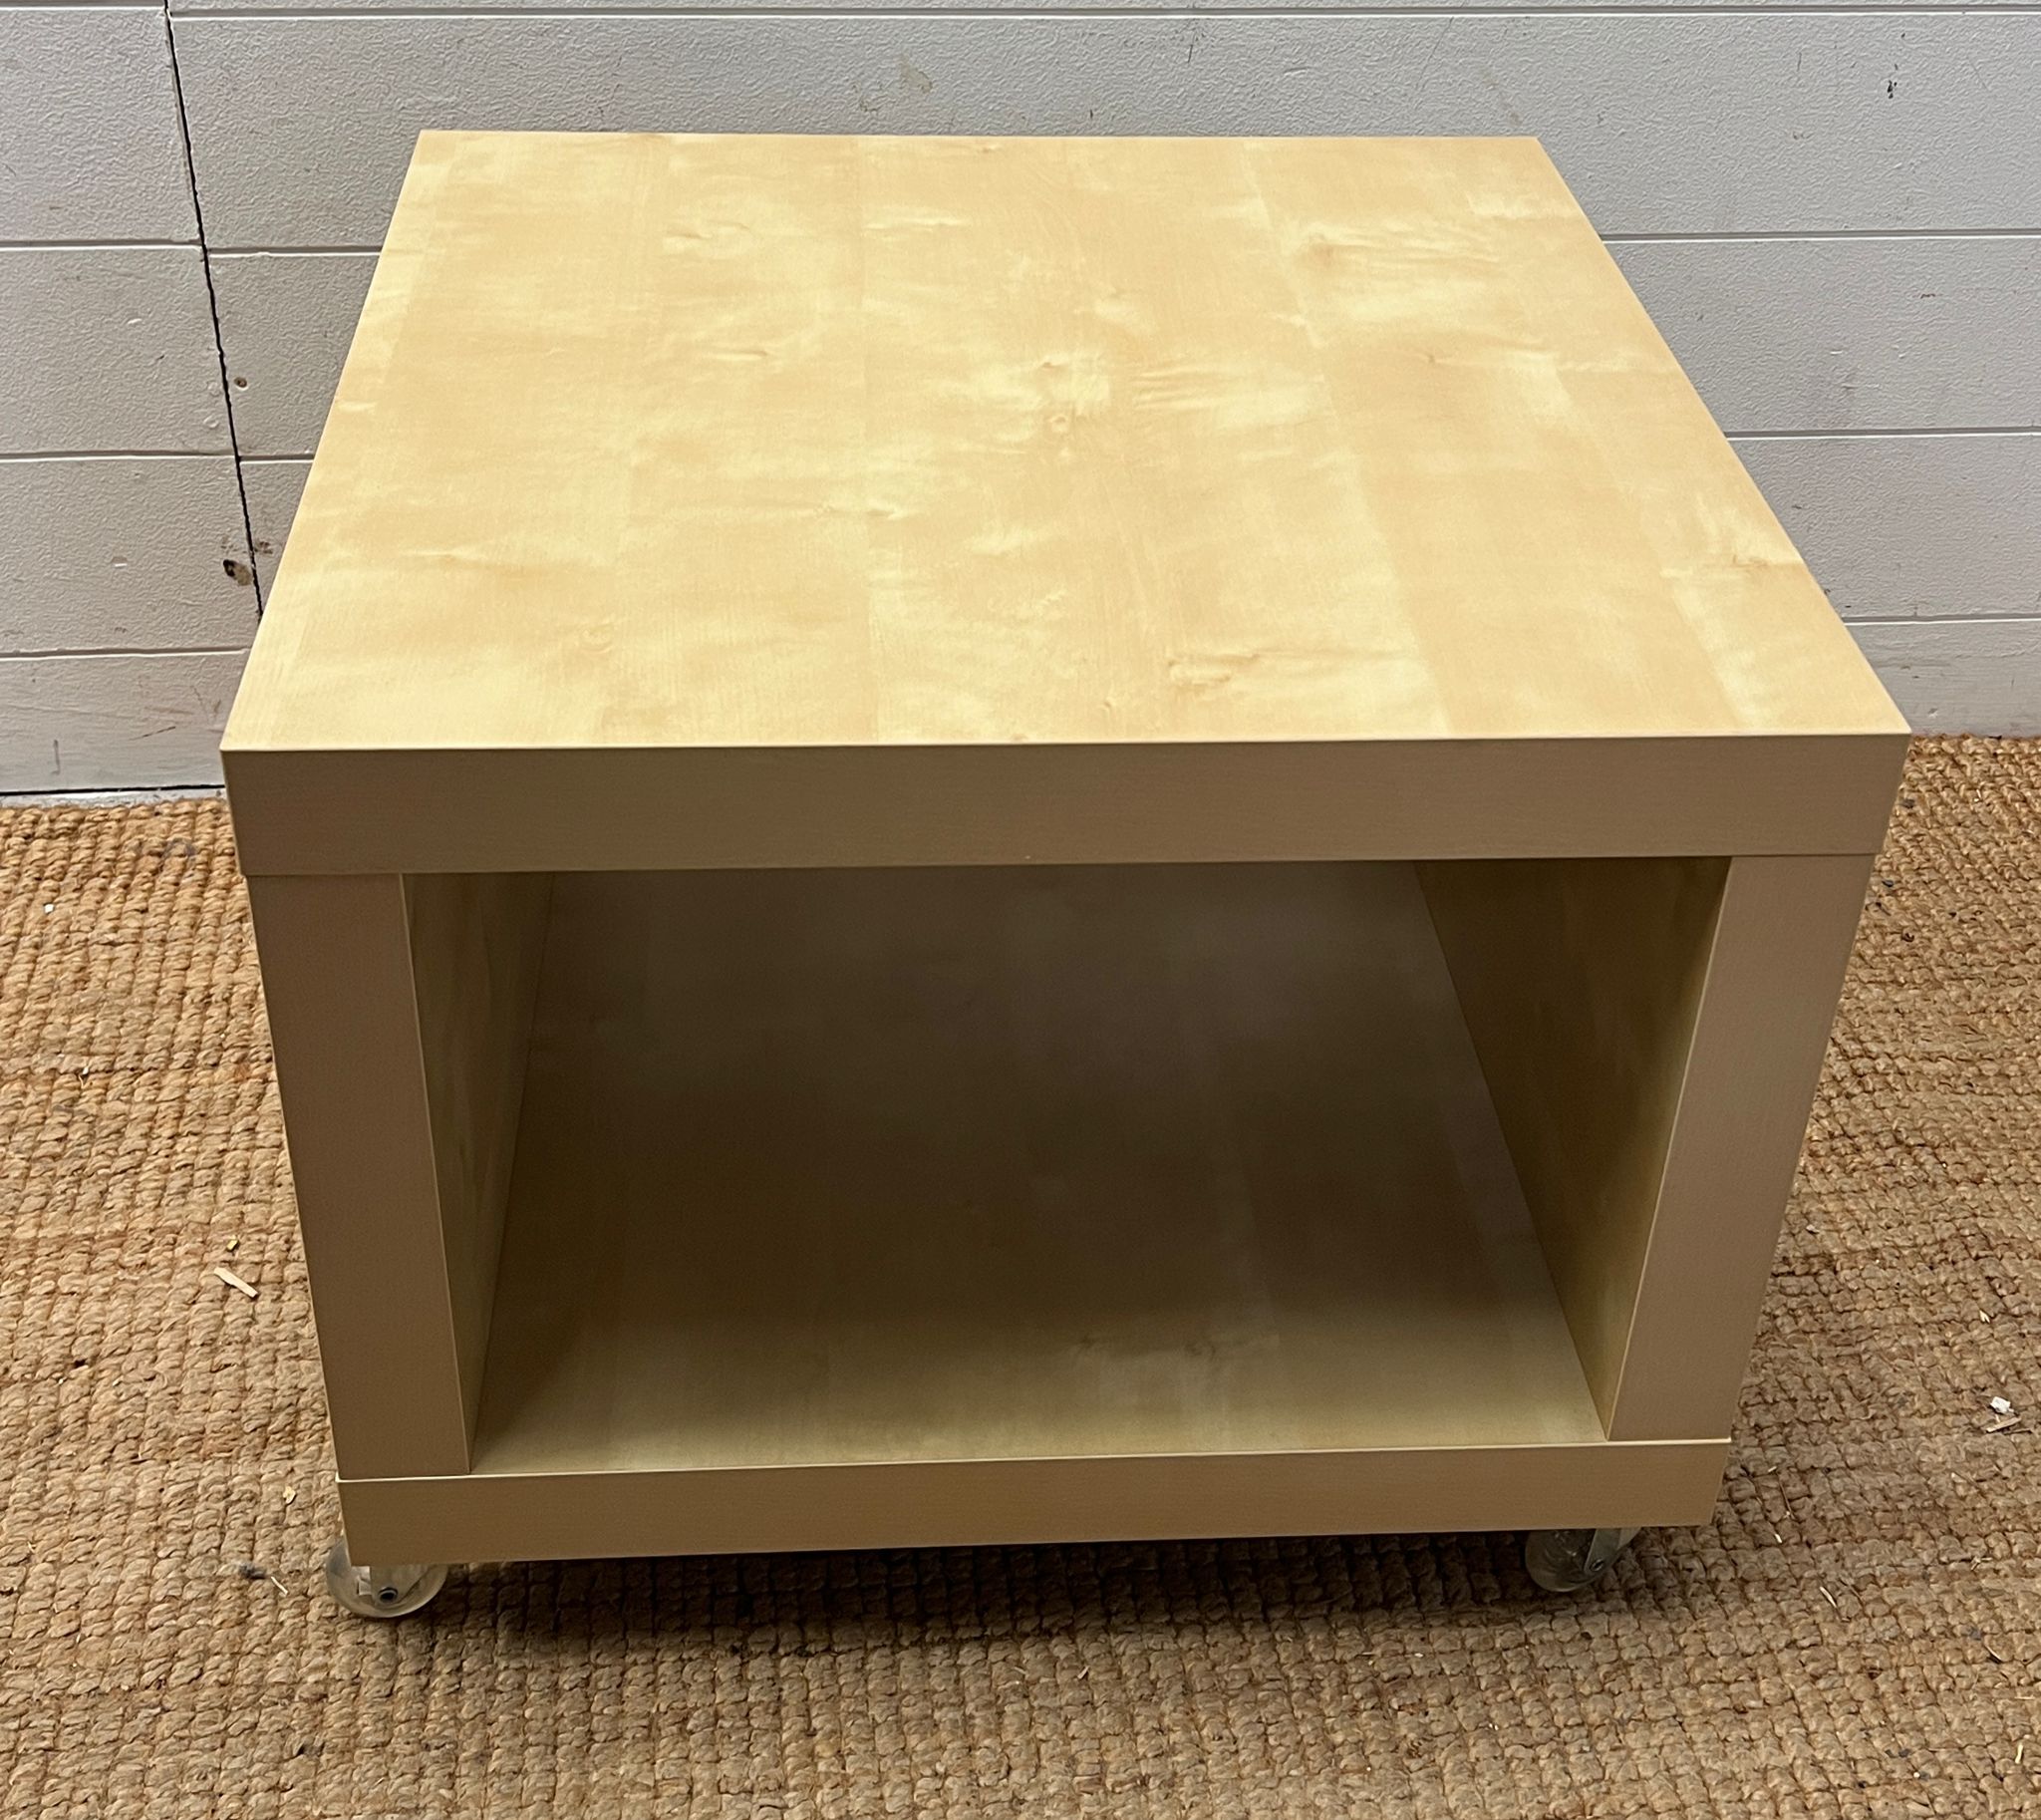 An Ikea cube storage table on wheels (H44cm Sq54cm)